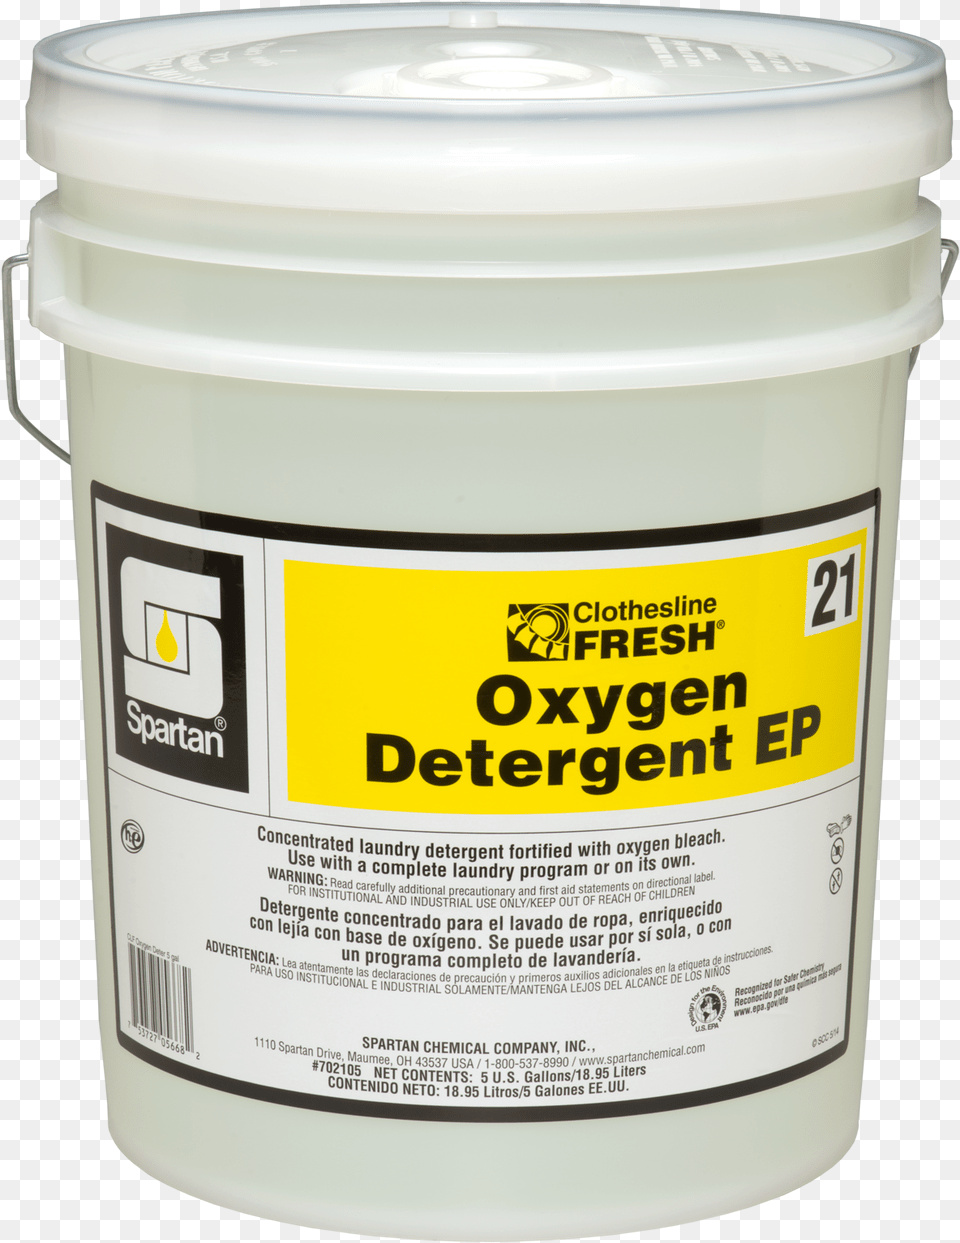 Clf Oxygen Detergent Ep Sani, Paint Container, Bottle, Shaker Free Transparent Png